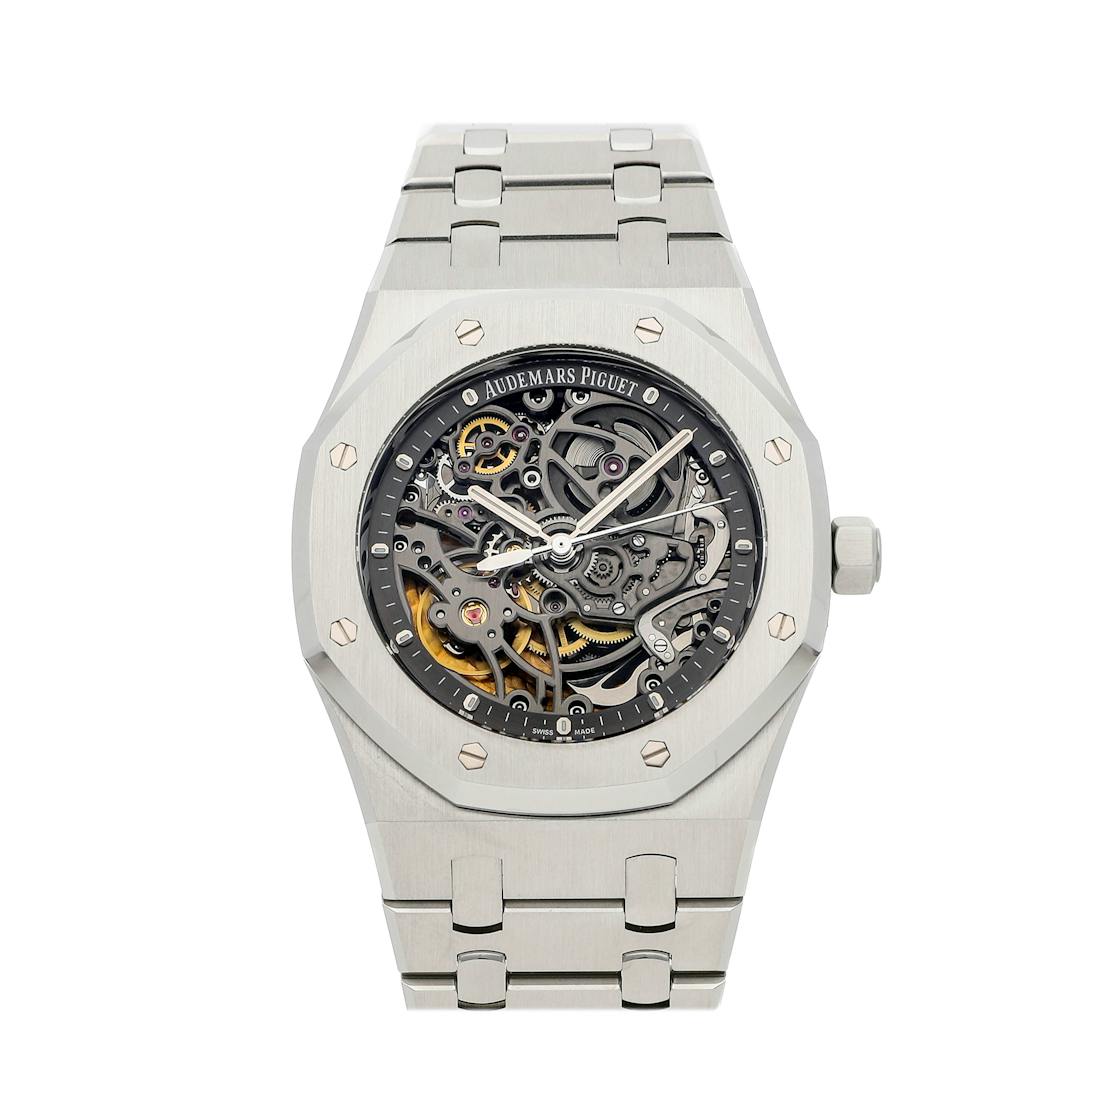 Audemars Piguet Royal Oak 15305ST Openworked Skeleton Watch